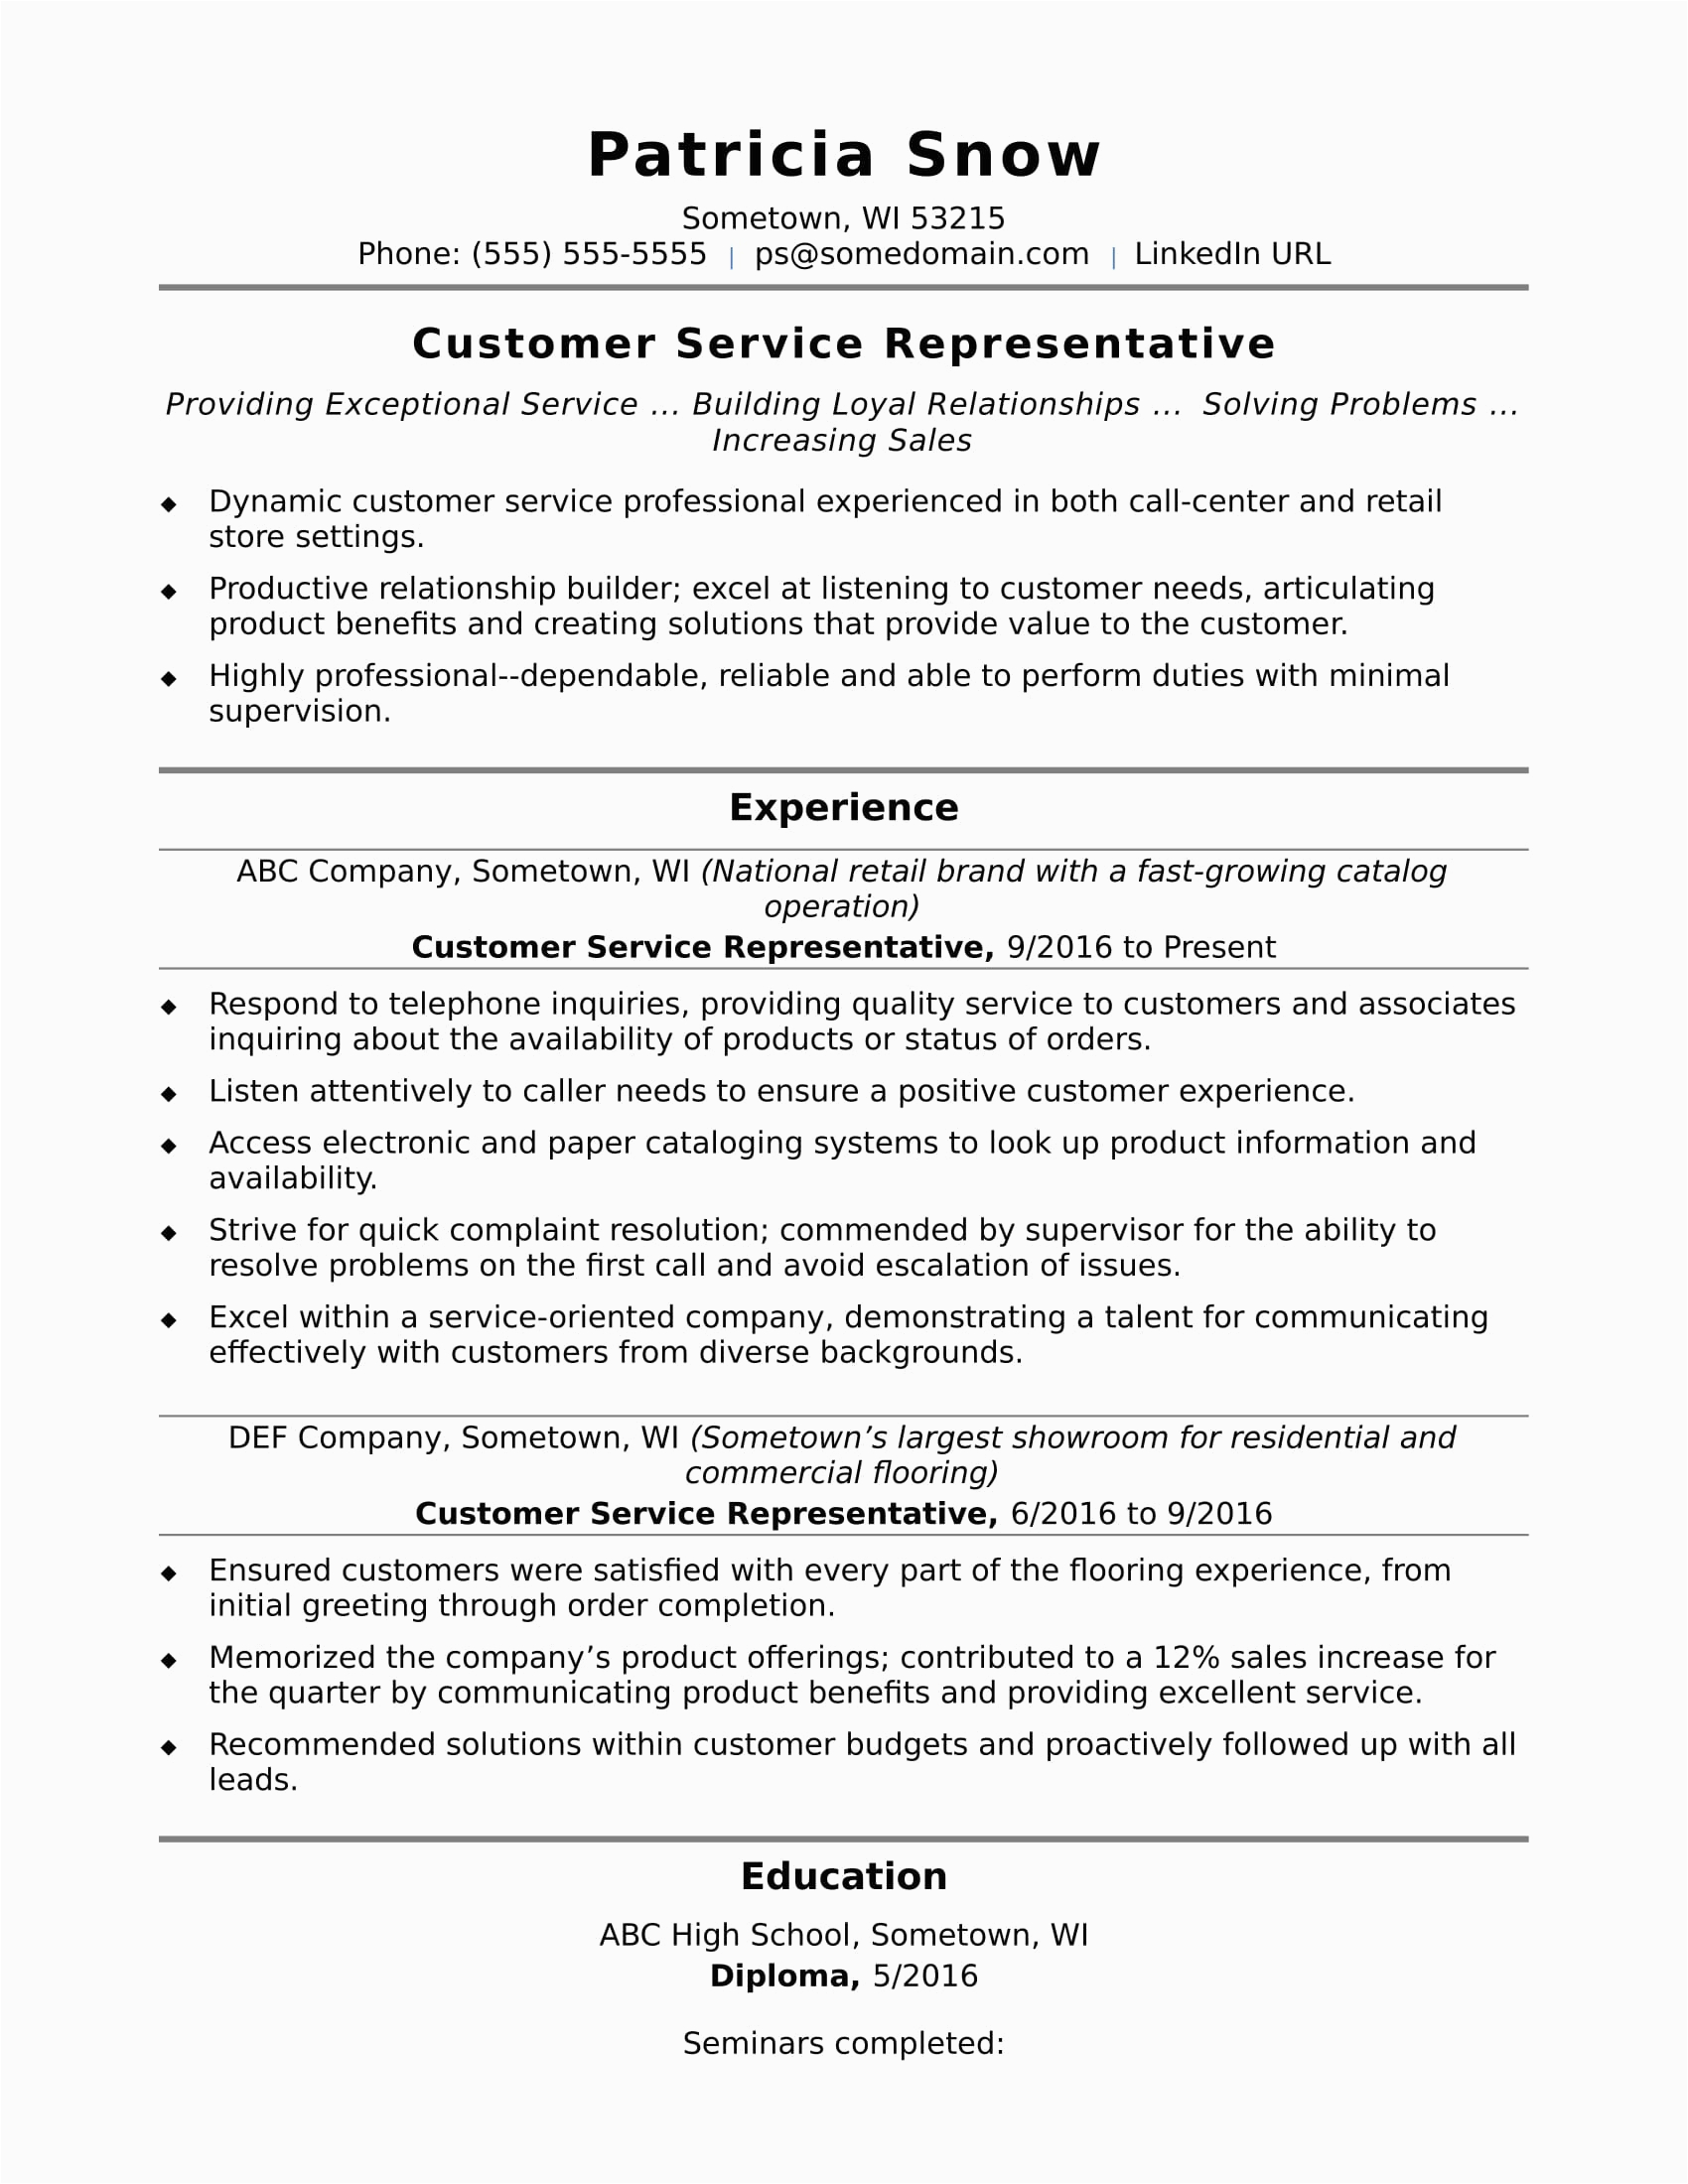 Summary Of Qualifications Sample Resume for Customer Service Customer Service Representative Resume Sample